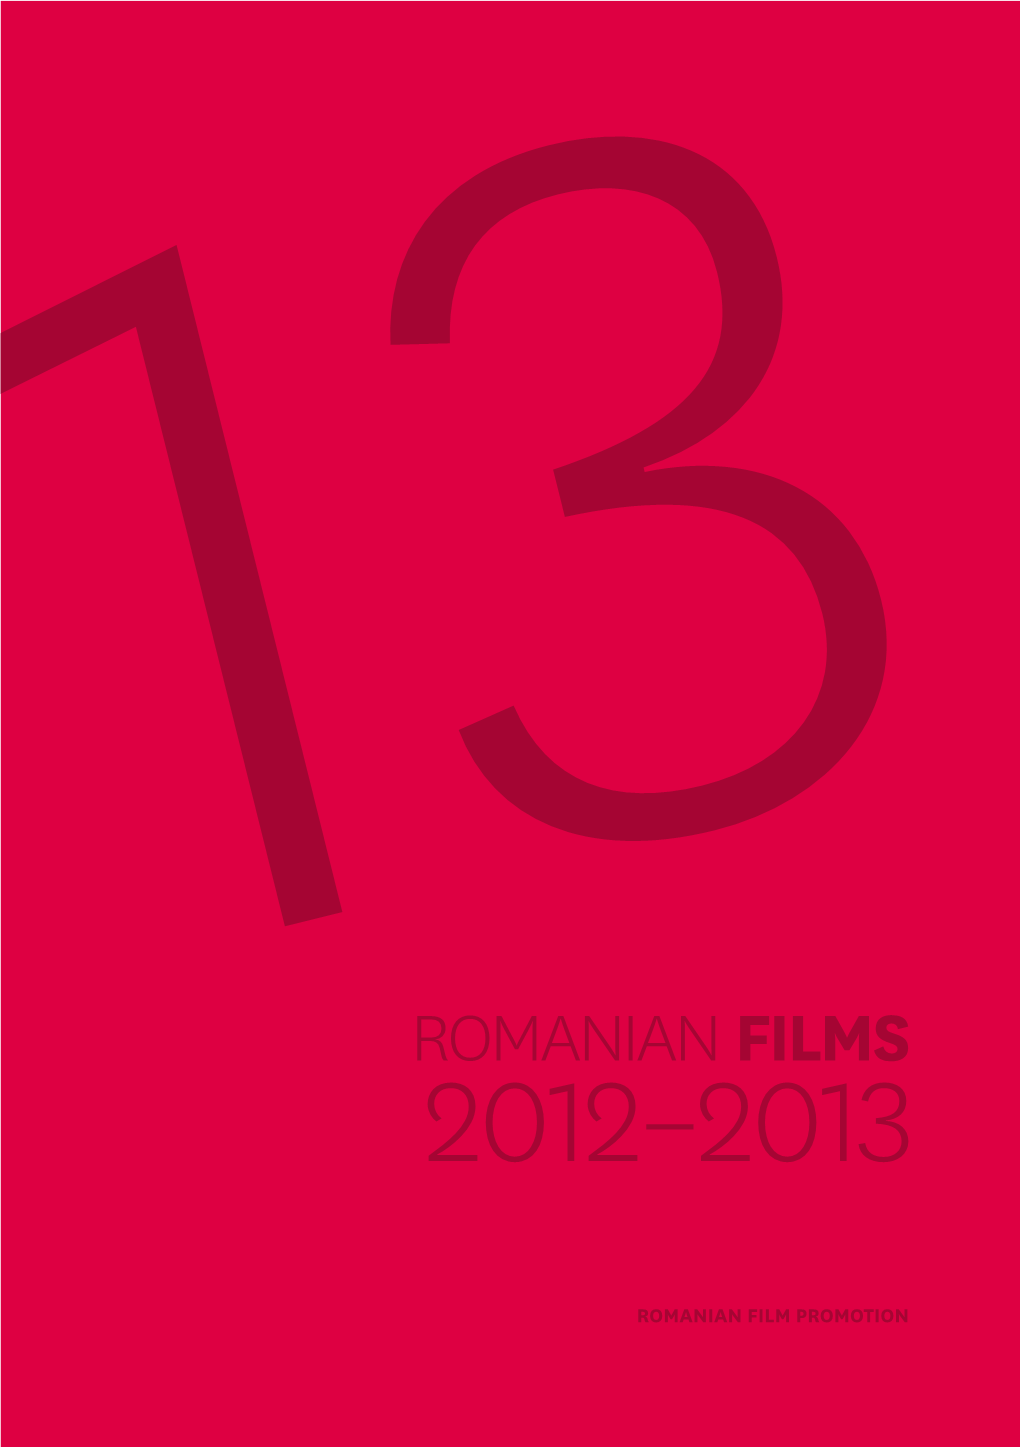 Romanianfilms